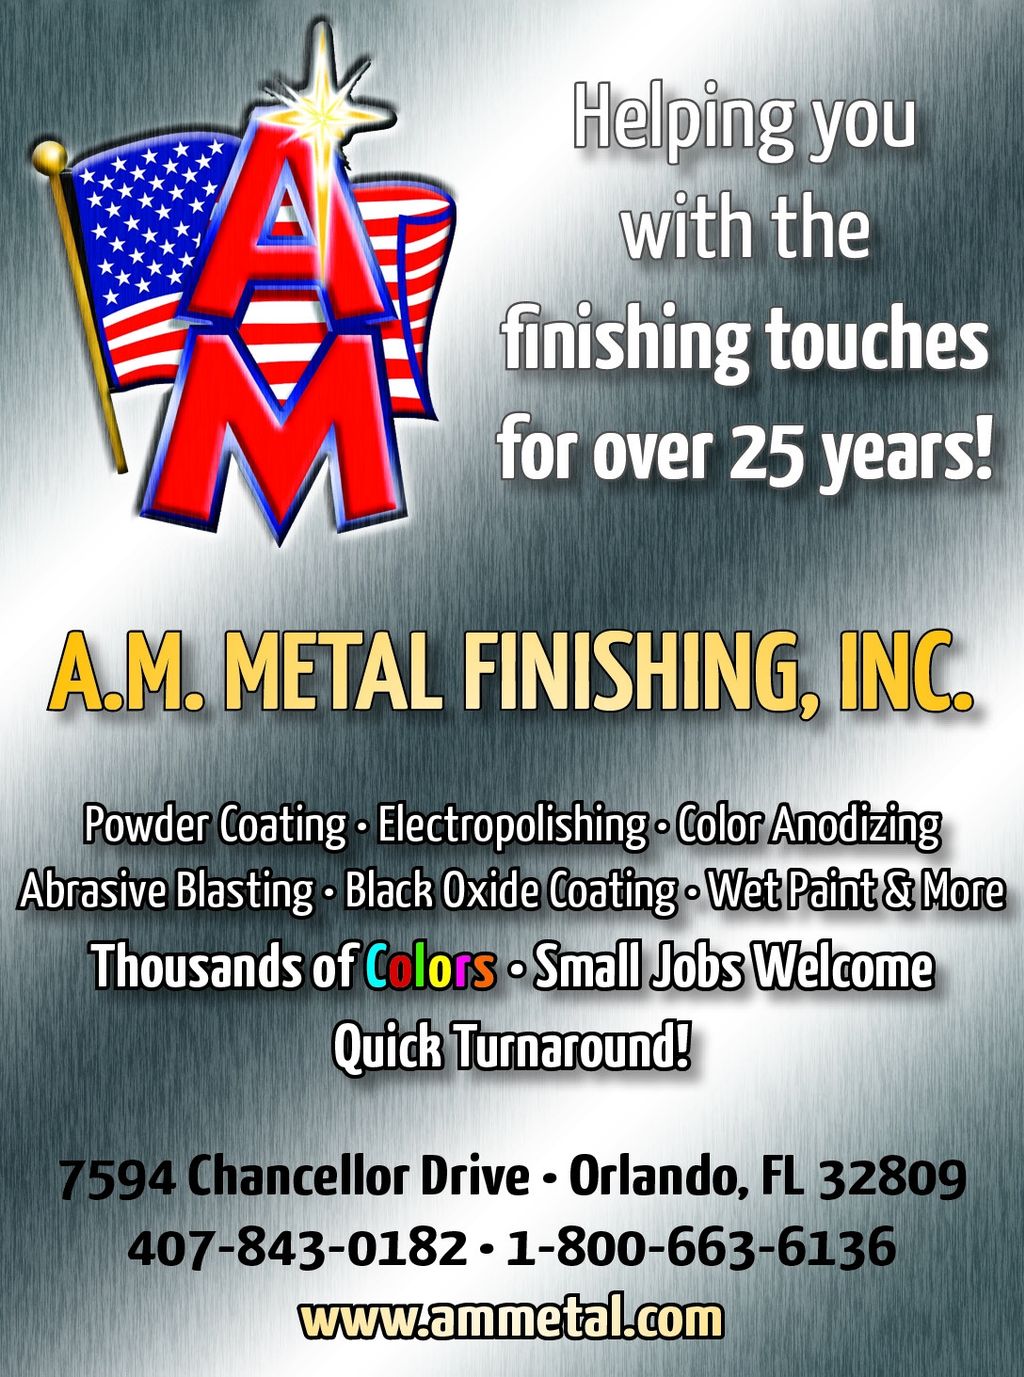 A. M. Metal Finishing, Inc.